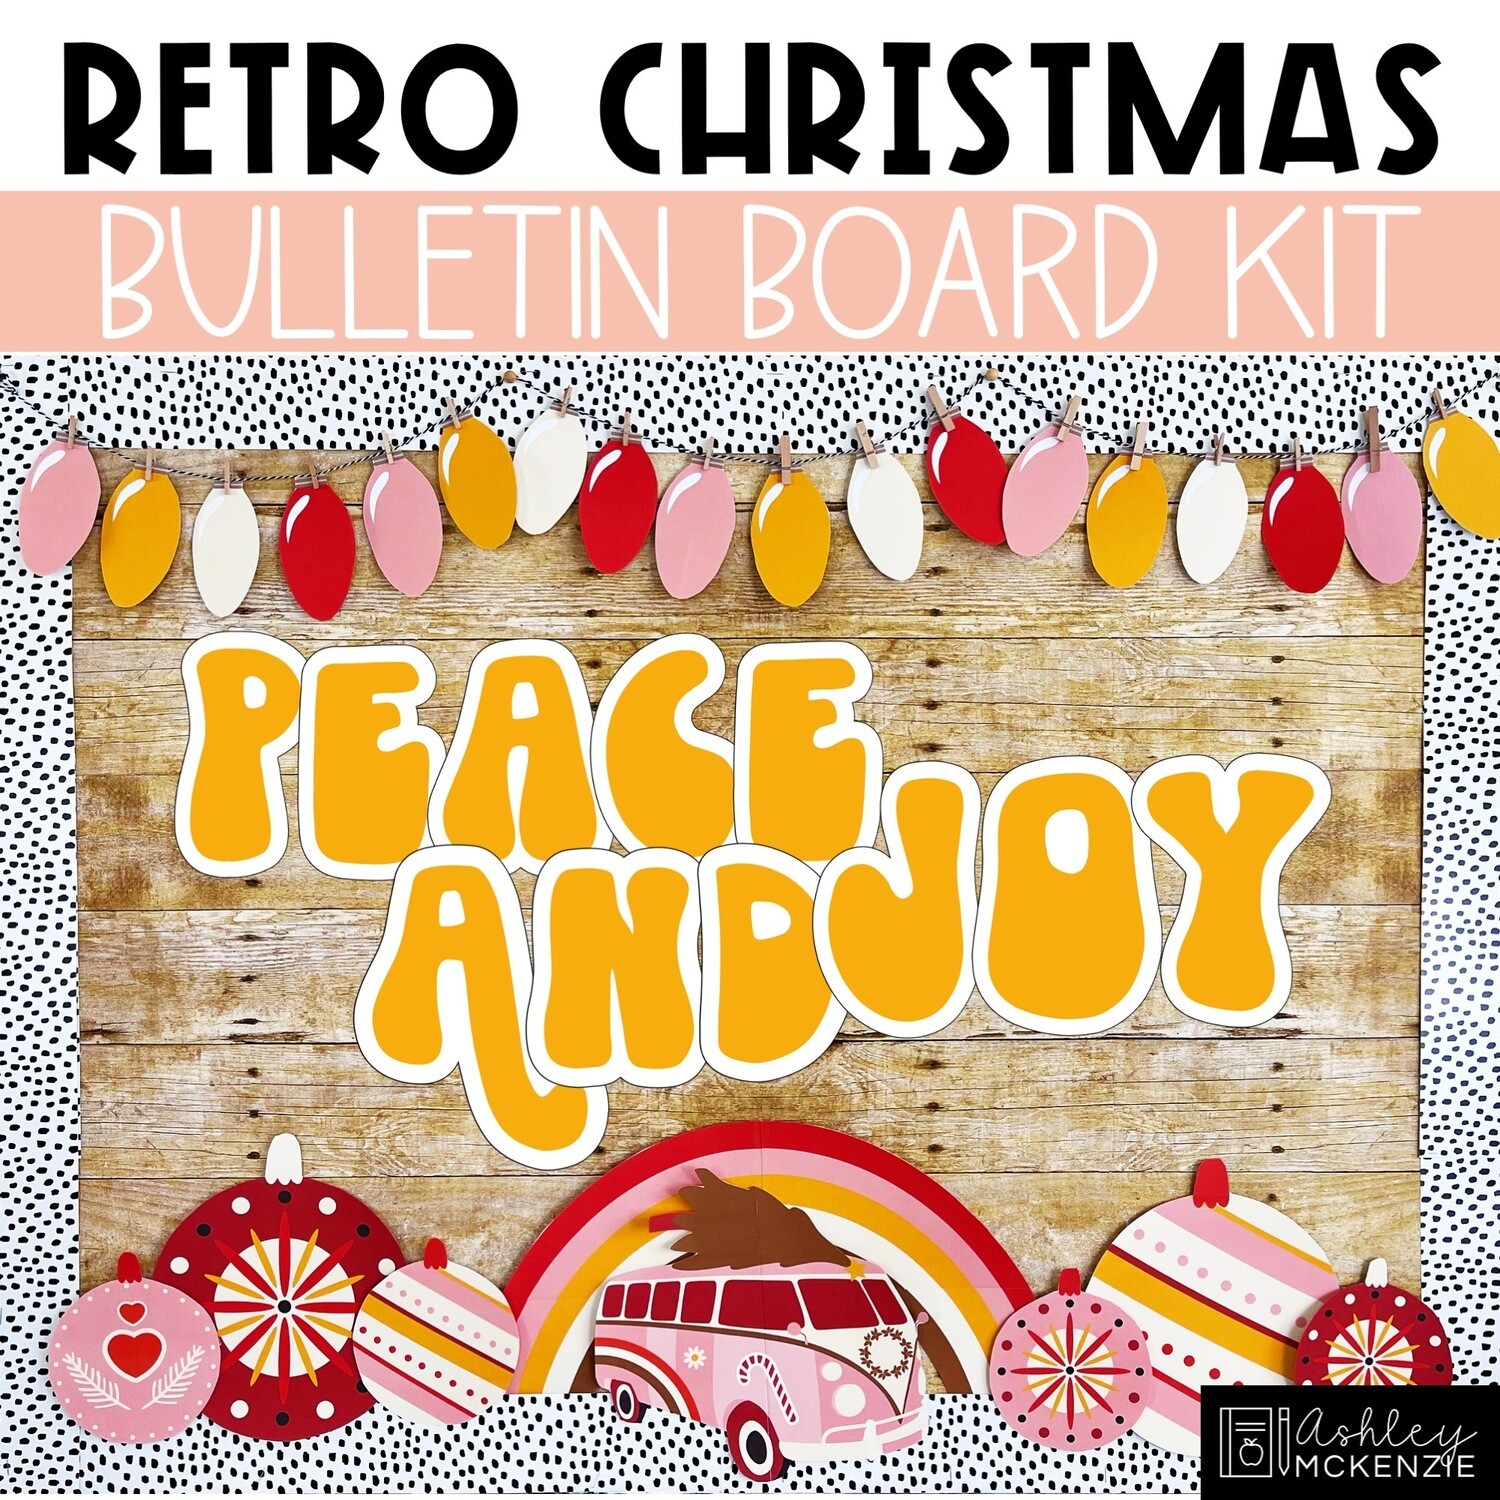 Christmas Retro Theme Bulletin Board Kit